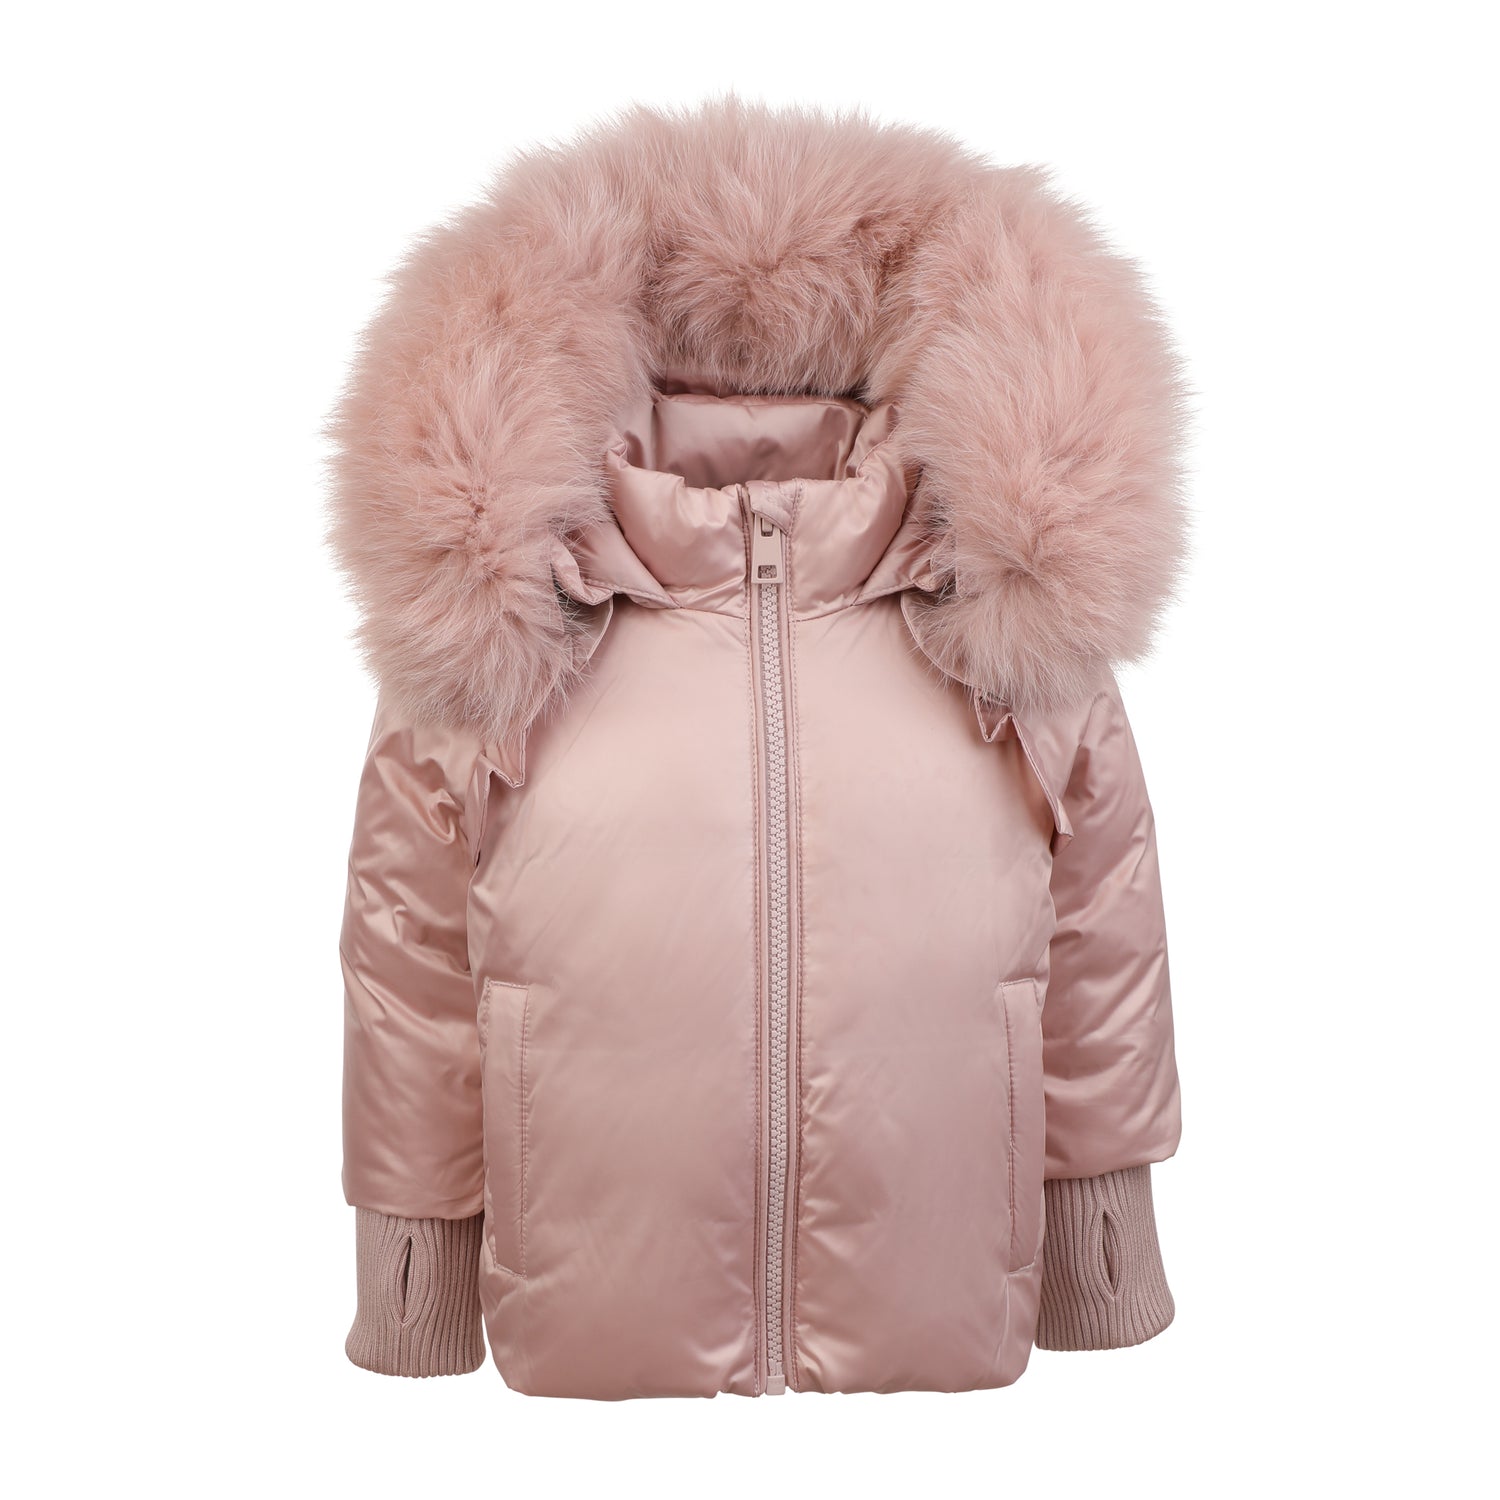 Pramie Pink with Pink Fur Ruffle Coat